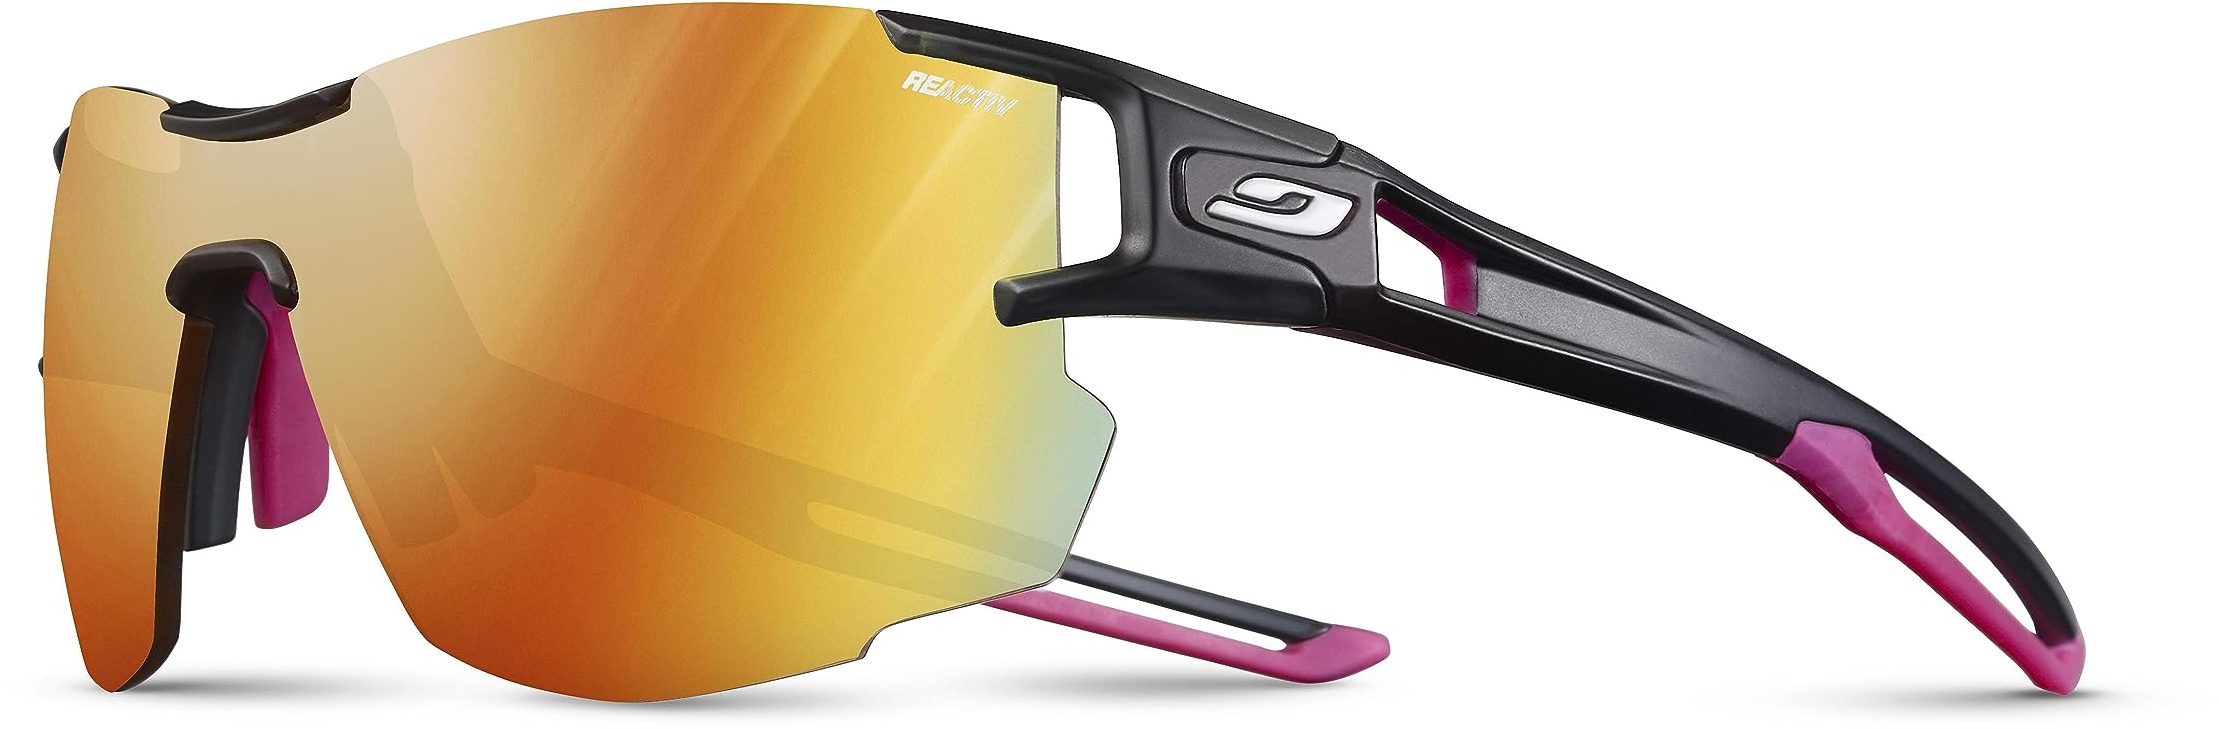 Julbo For Women Aerolite Sunglasses, Black/Pink, One Size